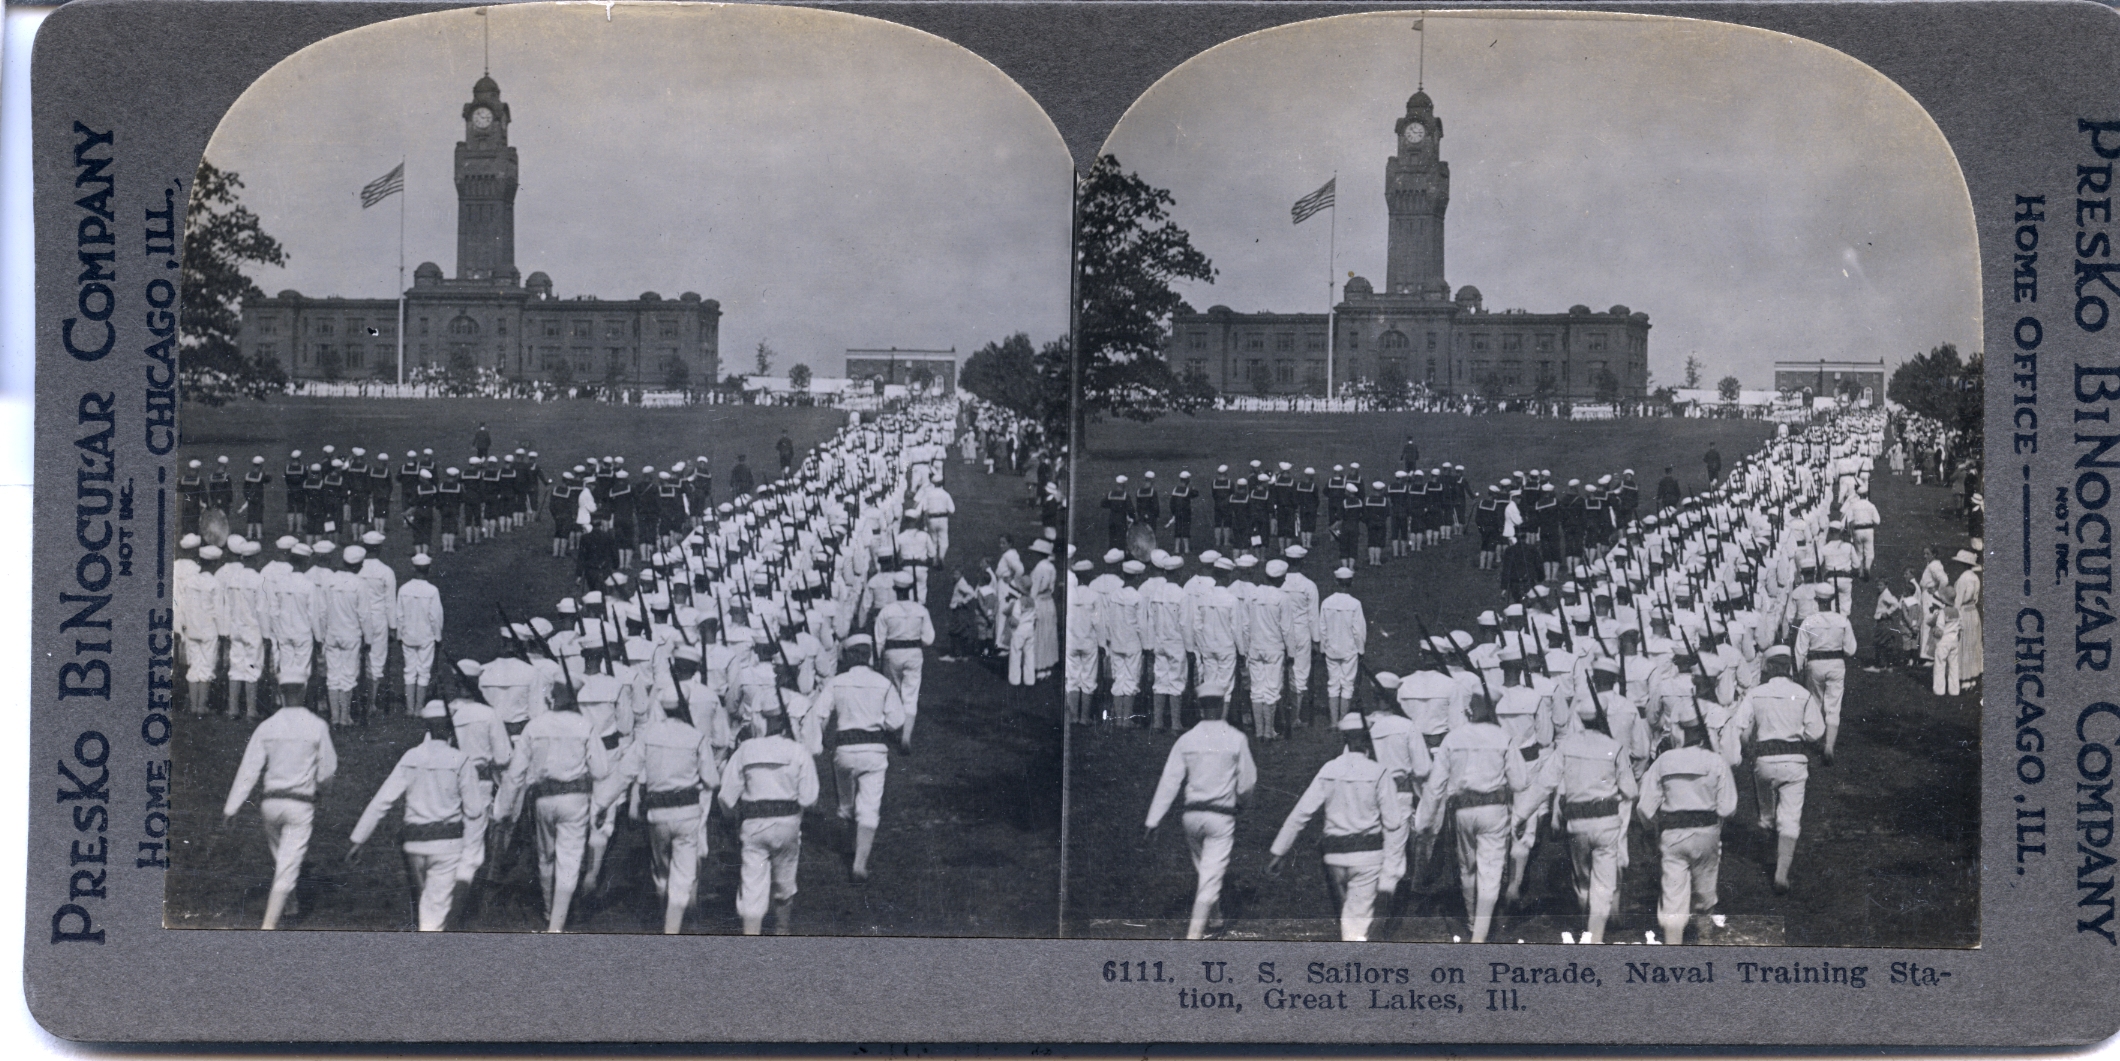 U.S. Sailors on Parade, Naval Training Station, Great Lakes, Ill.